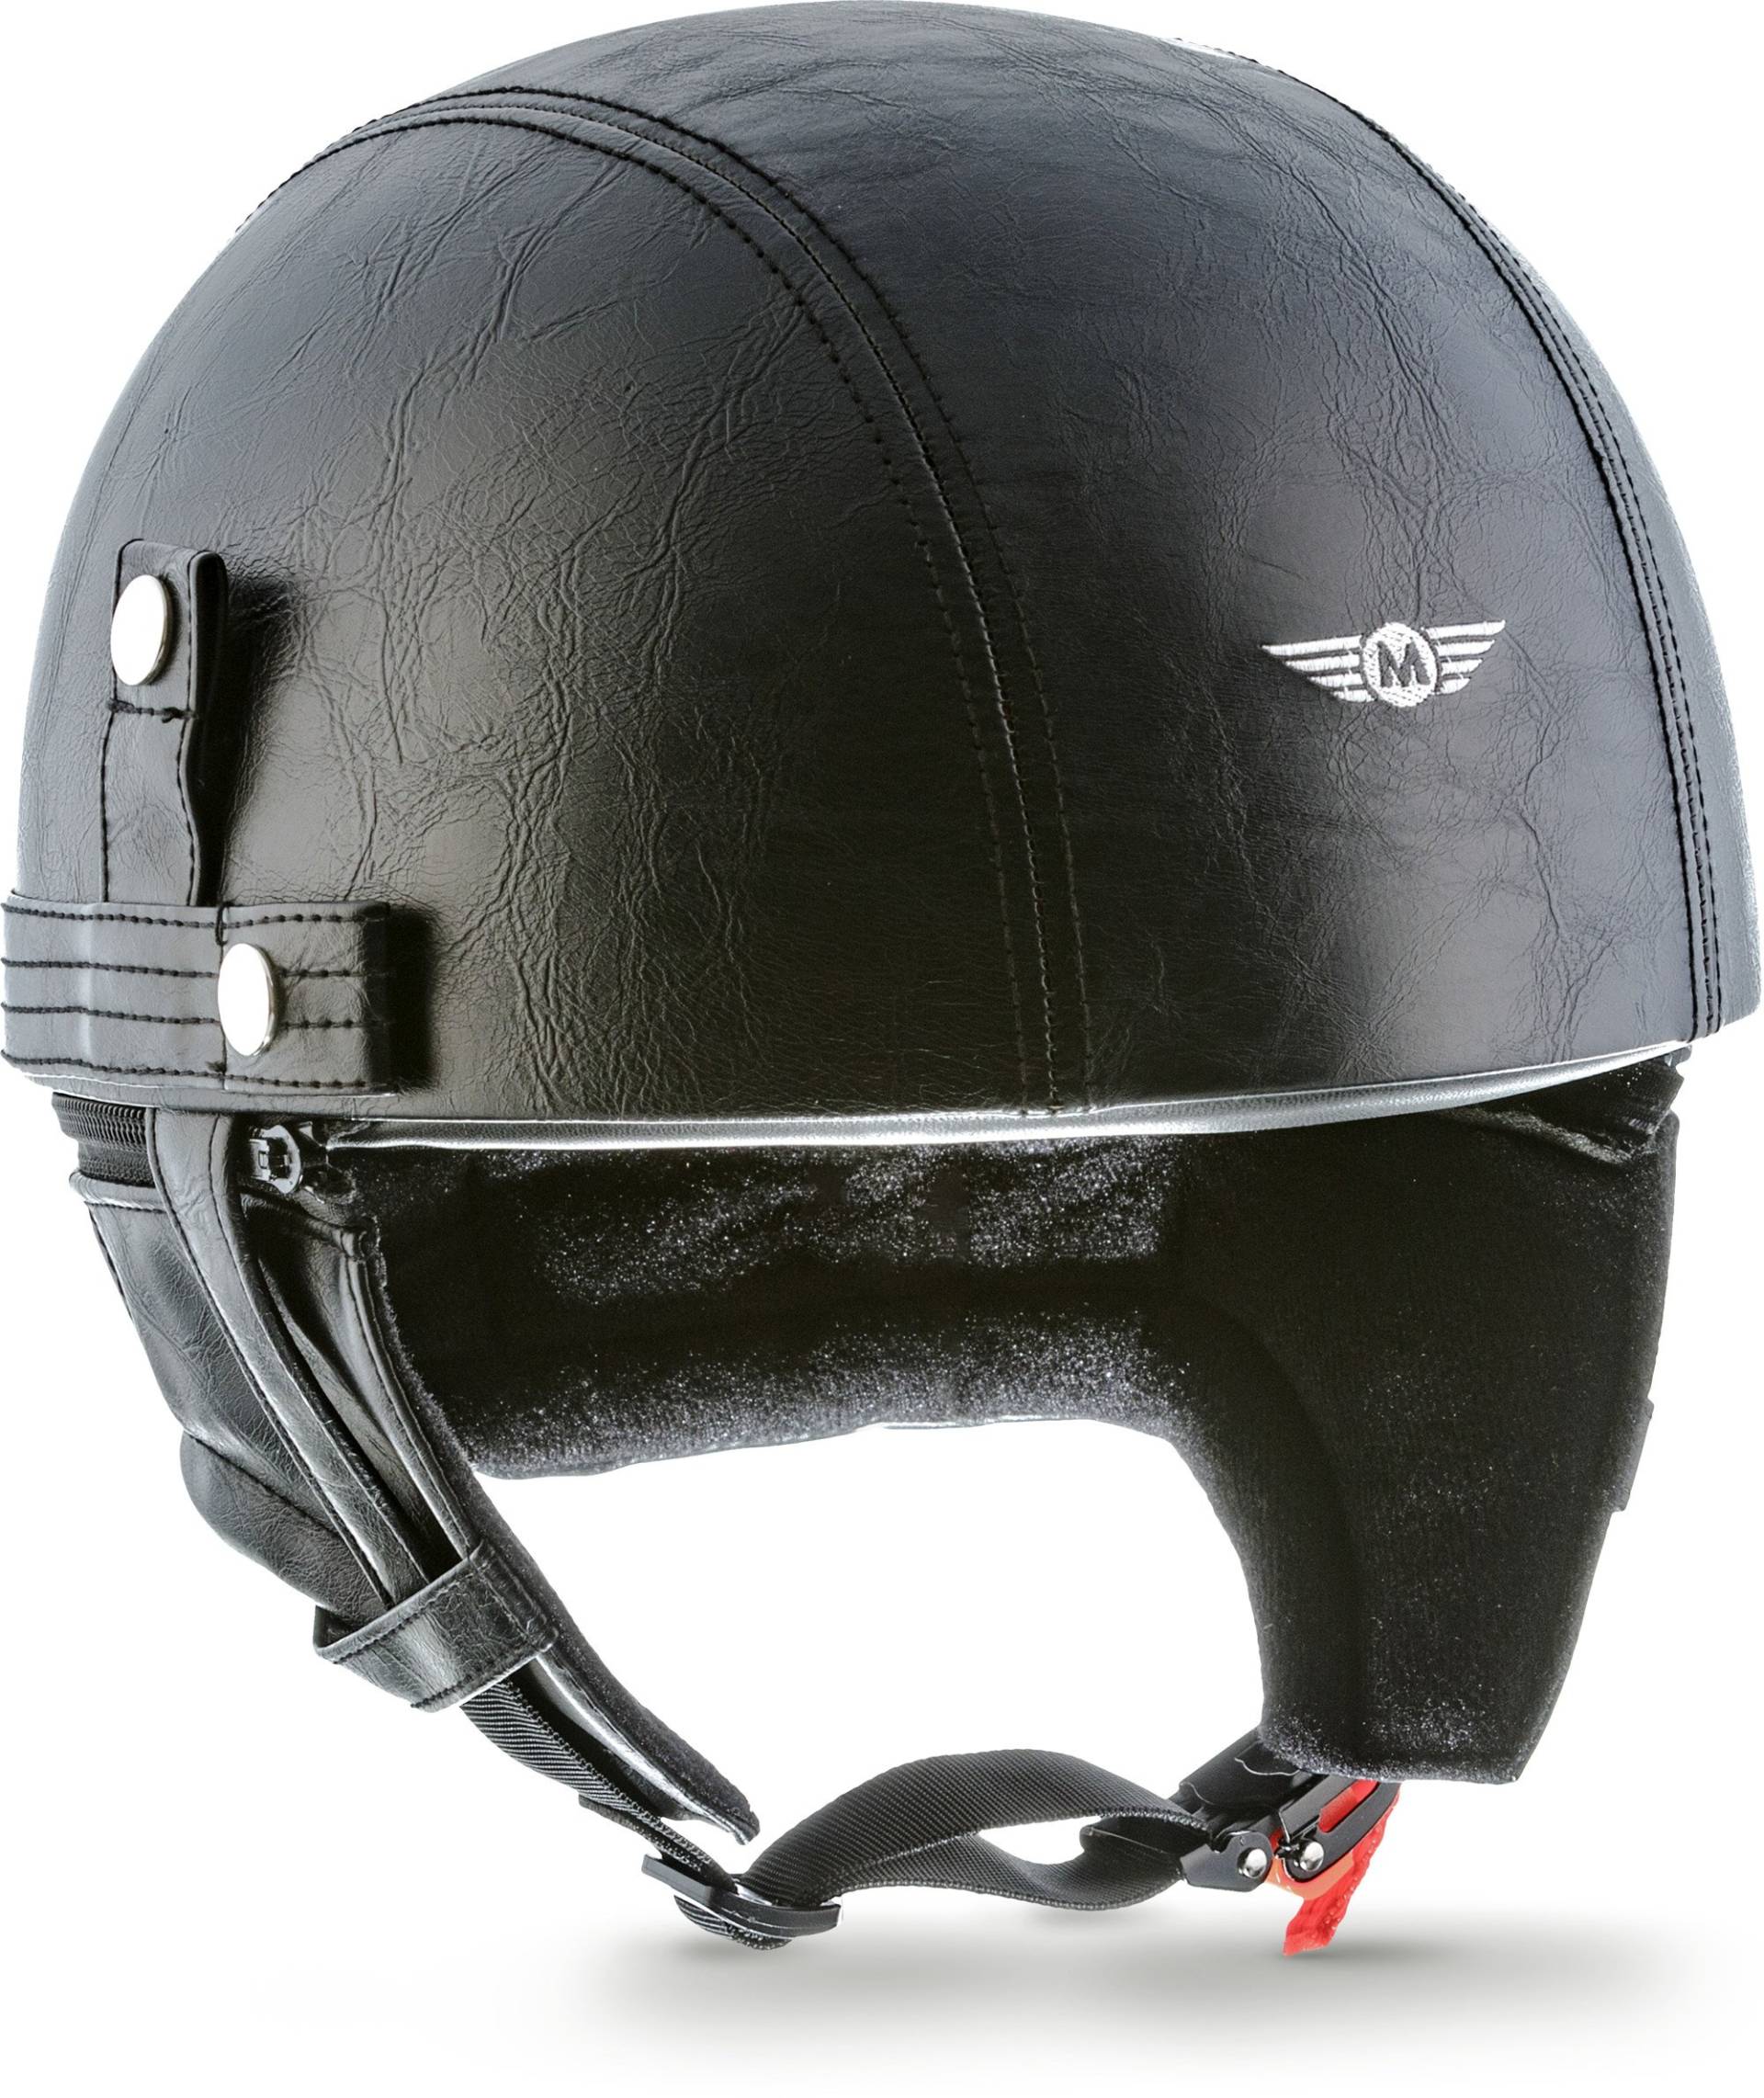 Moto Helmets® D22 „Leather Black“ · Brain-Cap · Halbschale Jet-Helm Motorrad-Helm Bobber · Fiberglas Schnellverschluss SlimShell Tasche S (55-56cm) von Moto Helmets